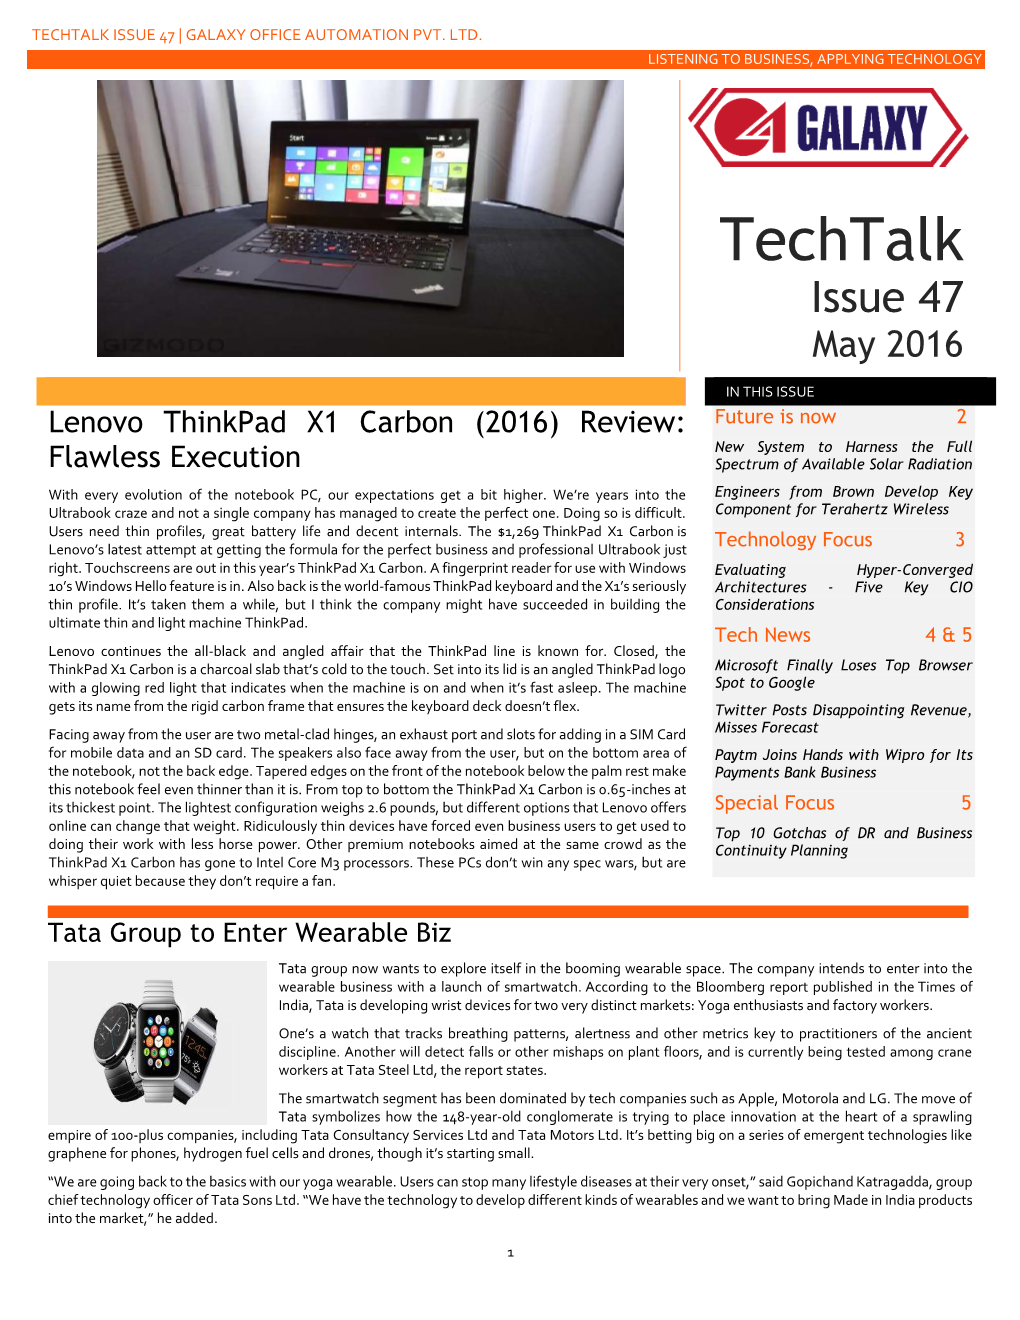 Techtalk Issue 47 | Galaxy Office Automation Pvt